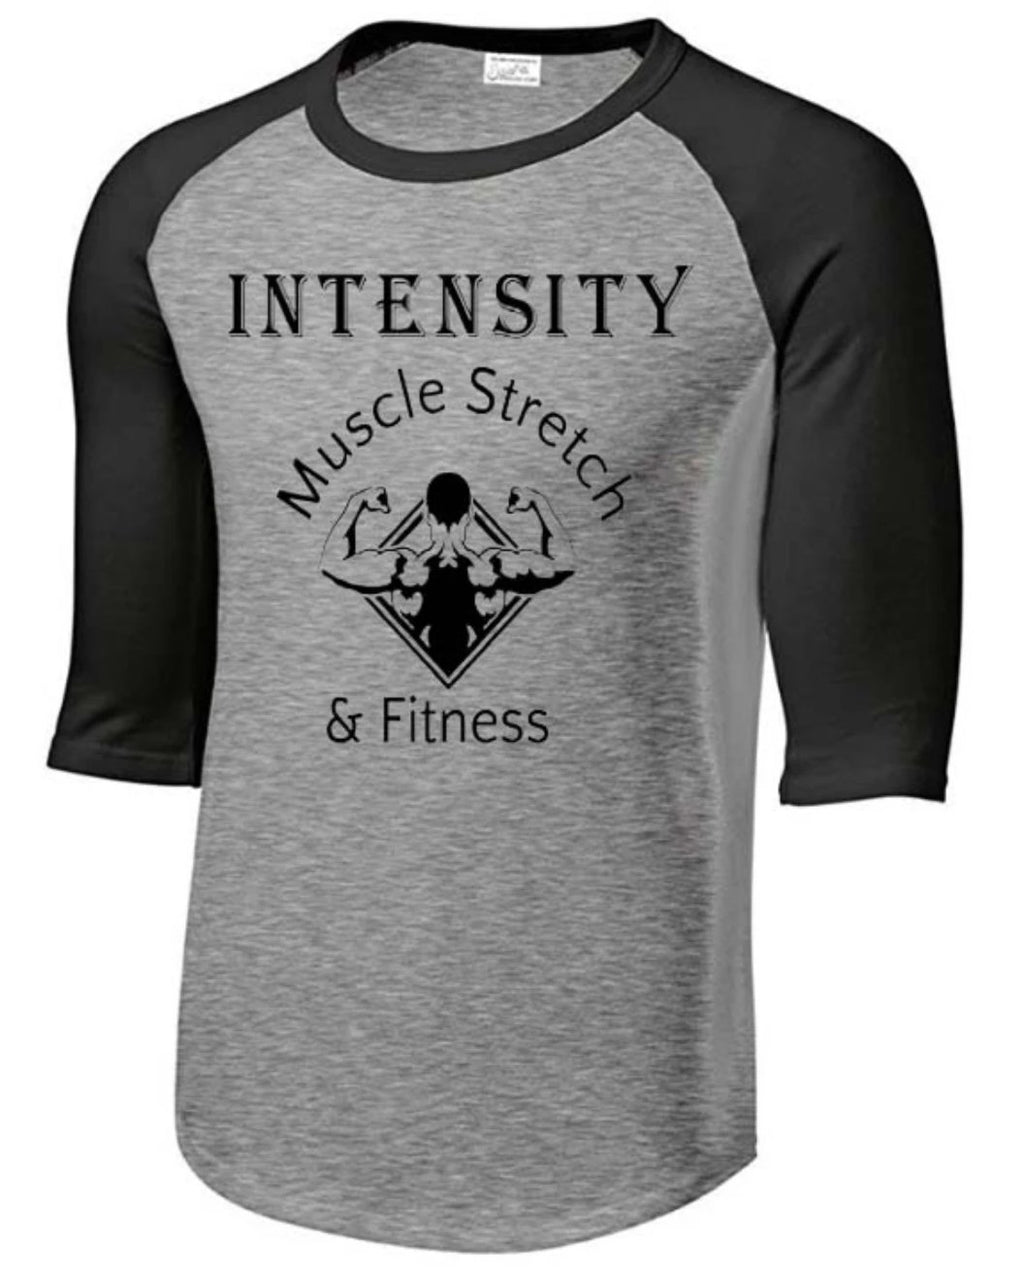 Men's 3/4 Sleeve "Intensity" Shirt